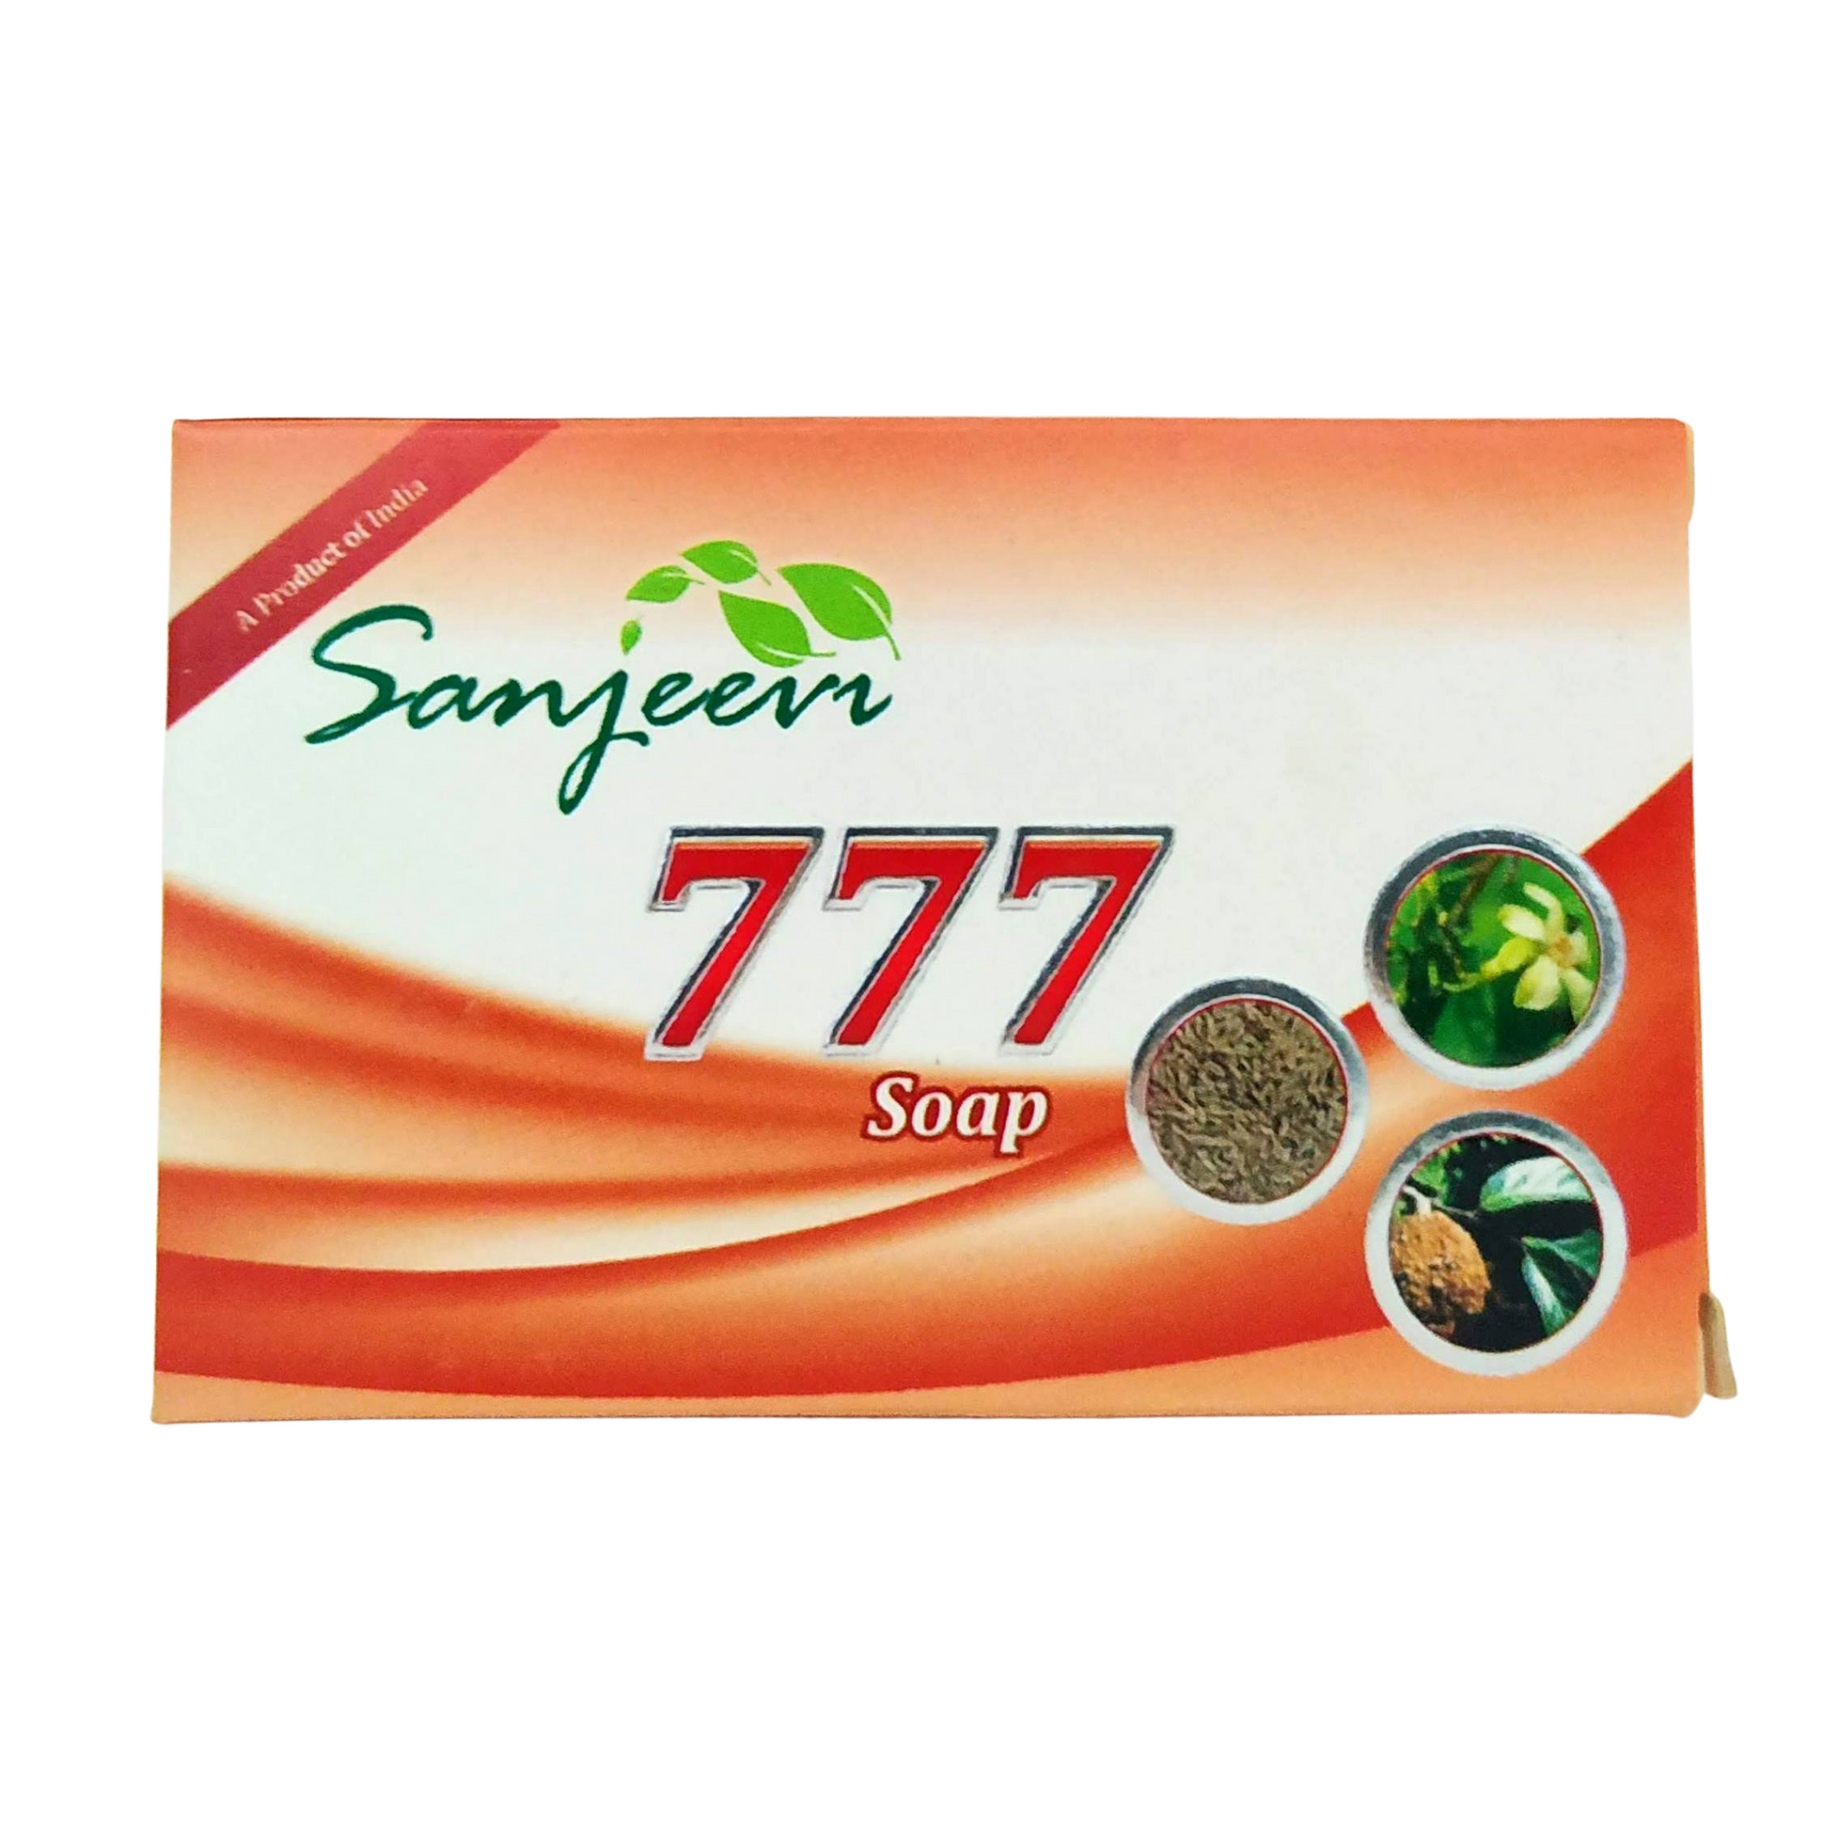 Shop Sanjeevi 777 Soap 100gm at price 91.00 from Sanjeevi Online - Ayush Care